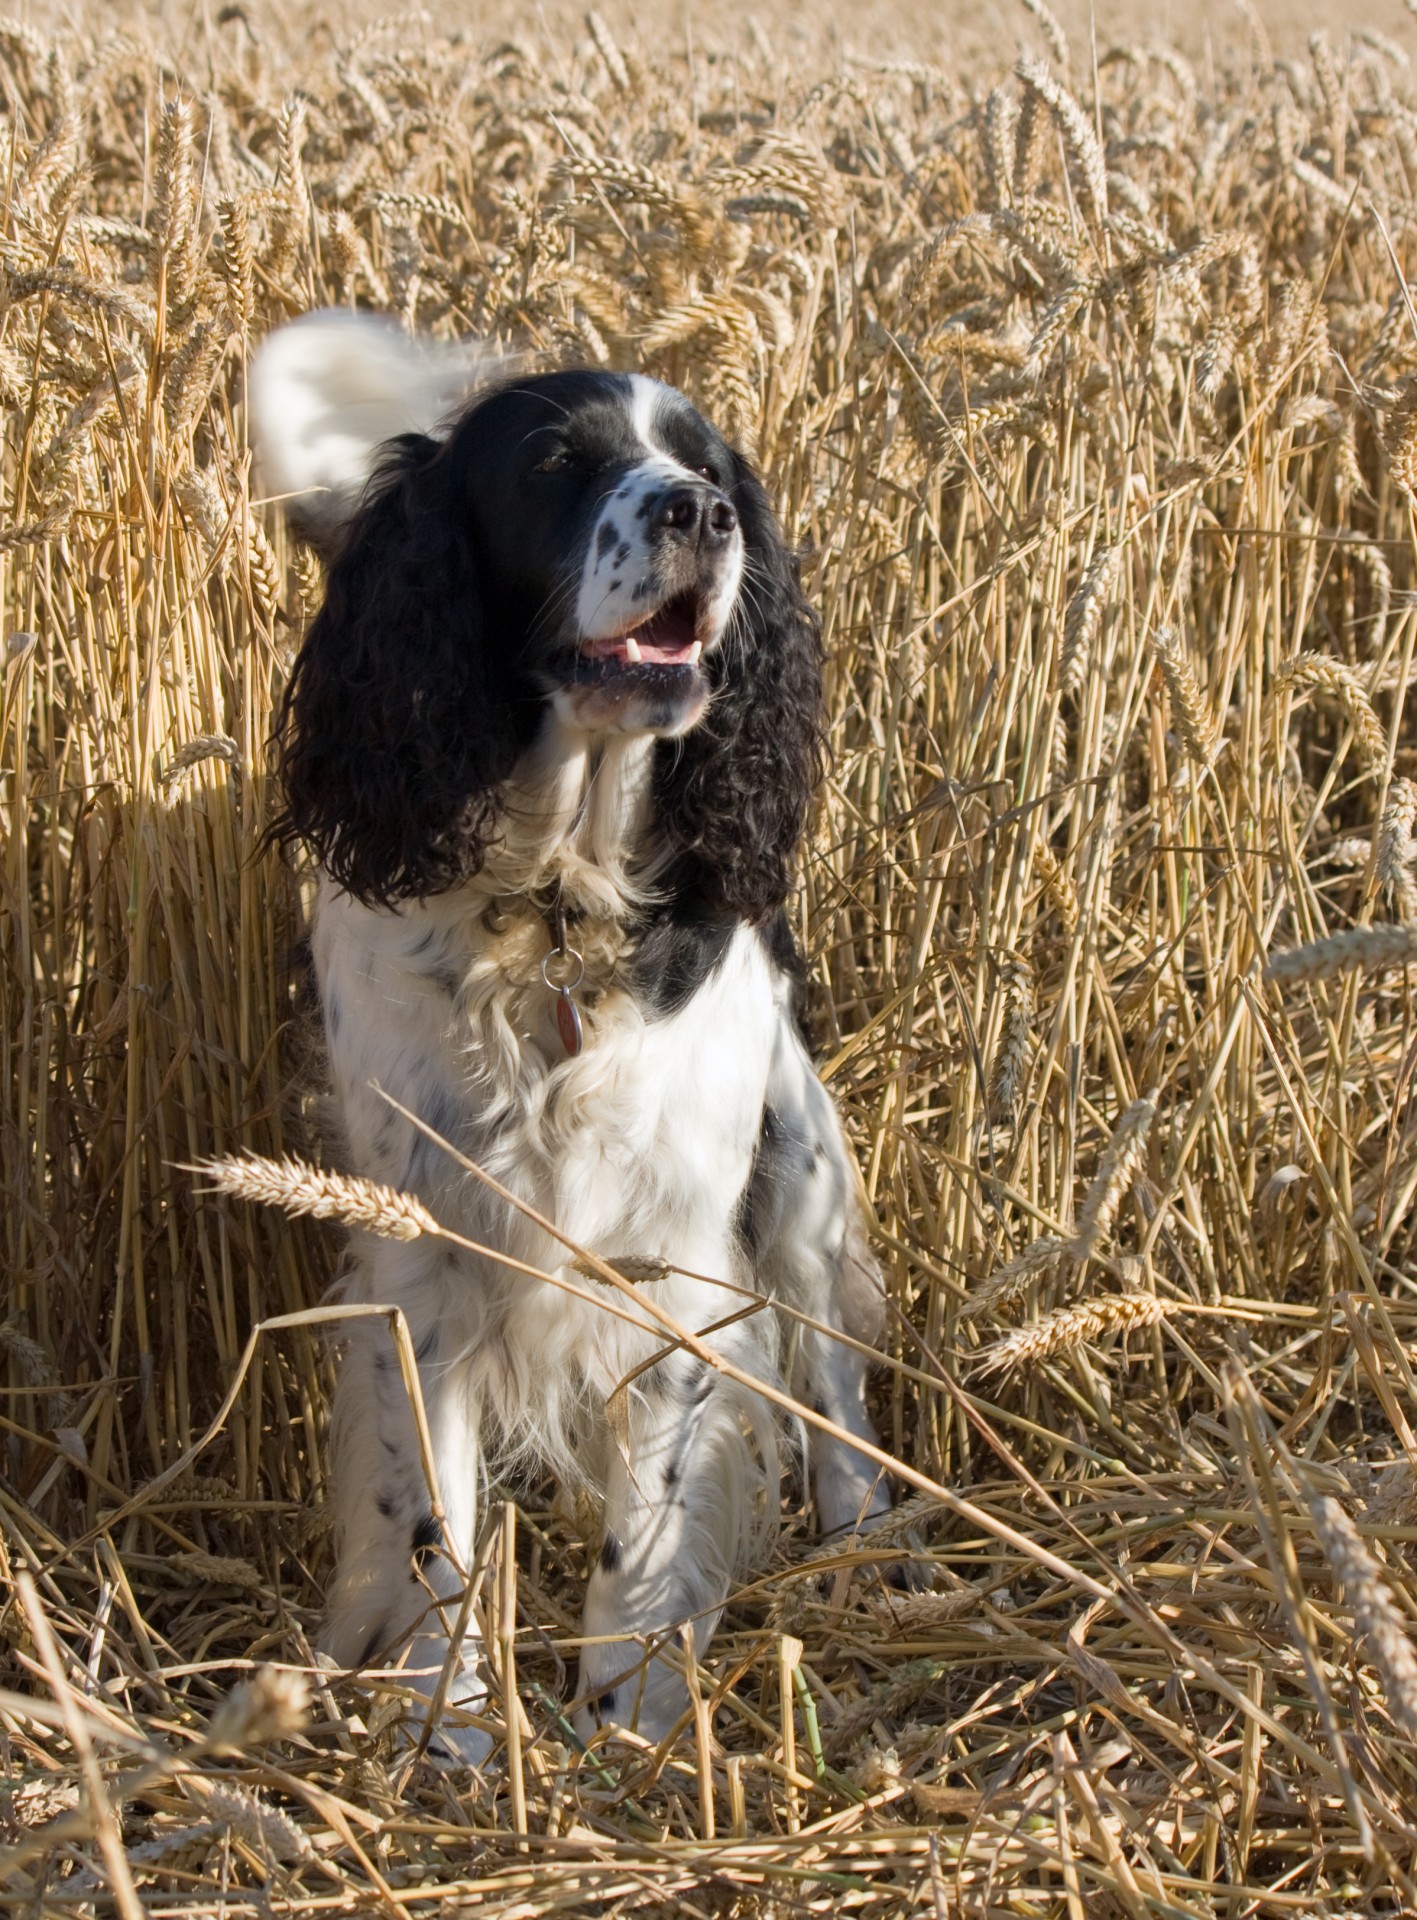 English Springer Spaniel dog barking in the wheat field